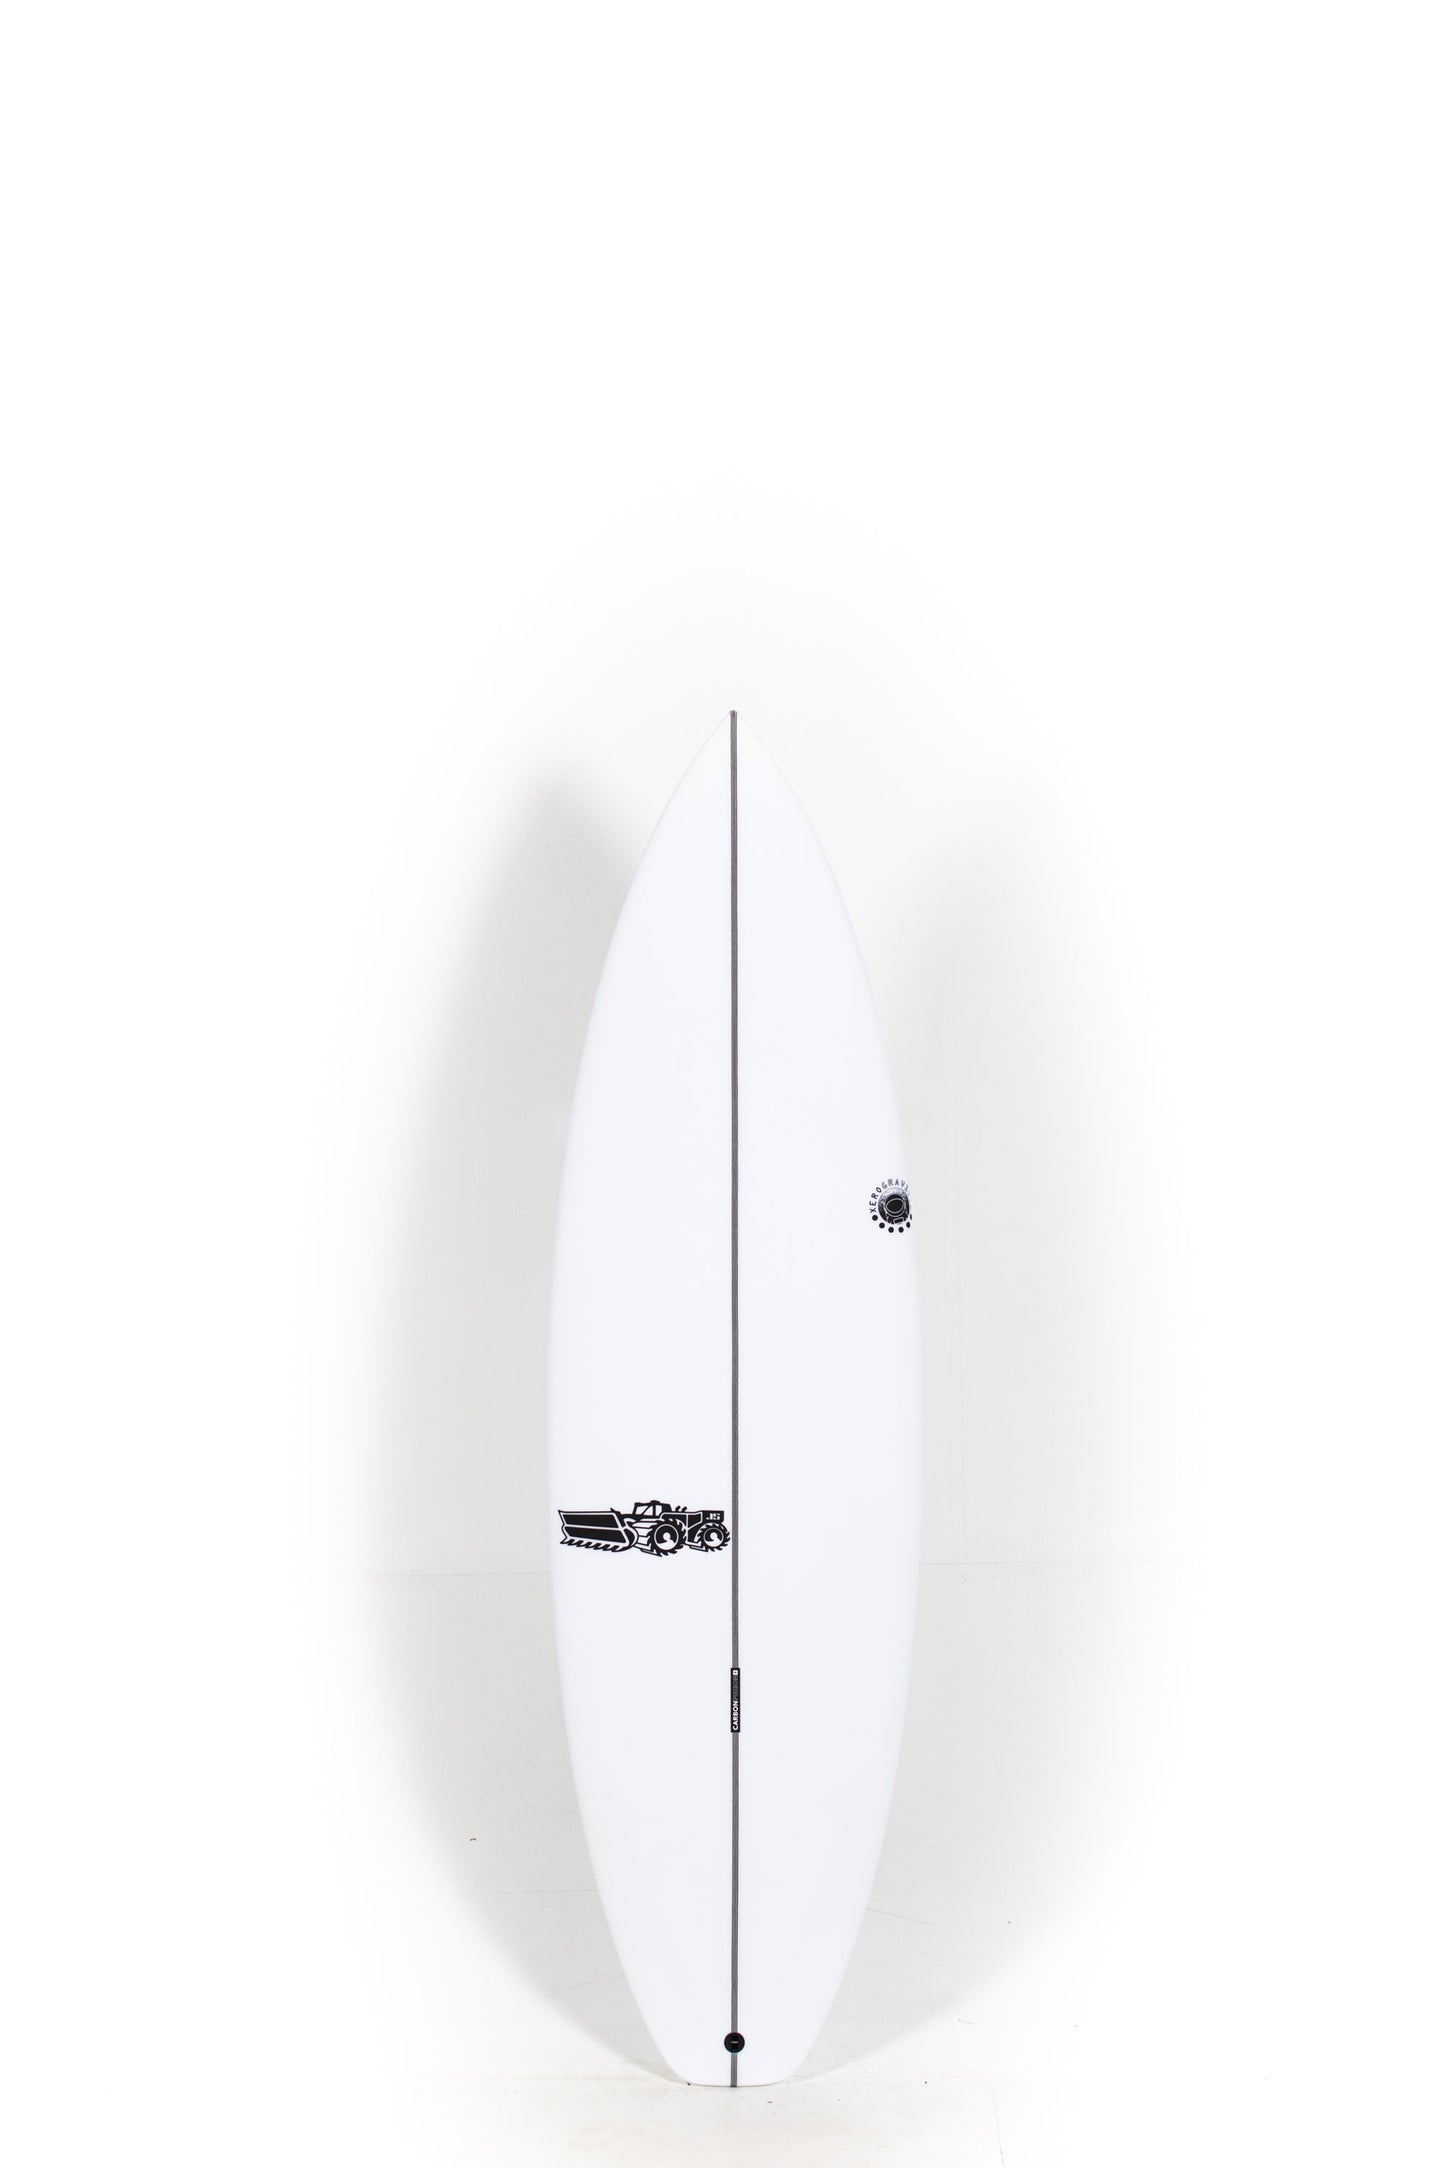 Pukas Surf Shop - JS Surfboards - XERO GRAVITY - 5'9" x 19" x 2.31" x 27L. - XEROGRAVITY